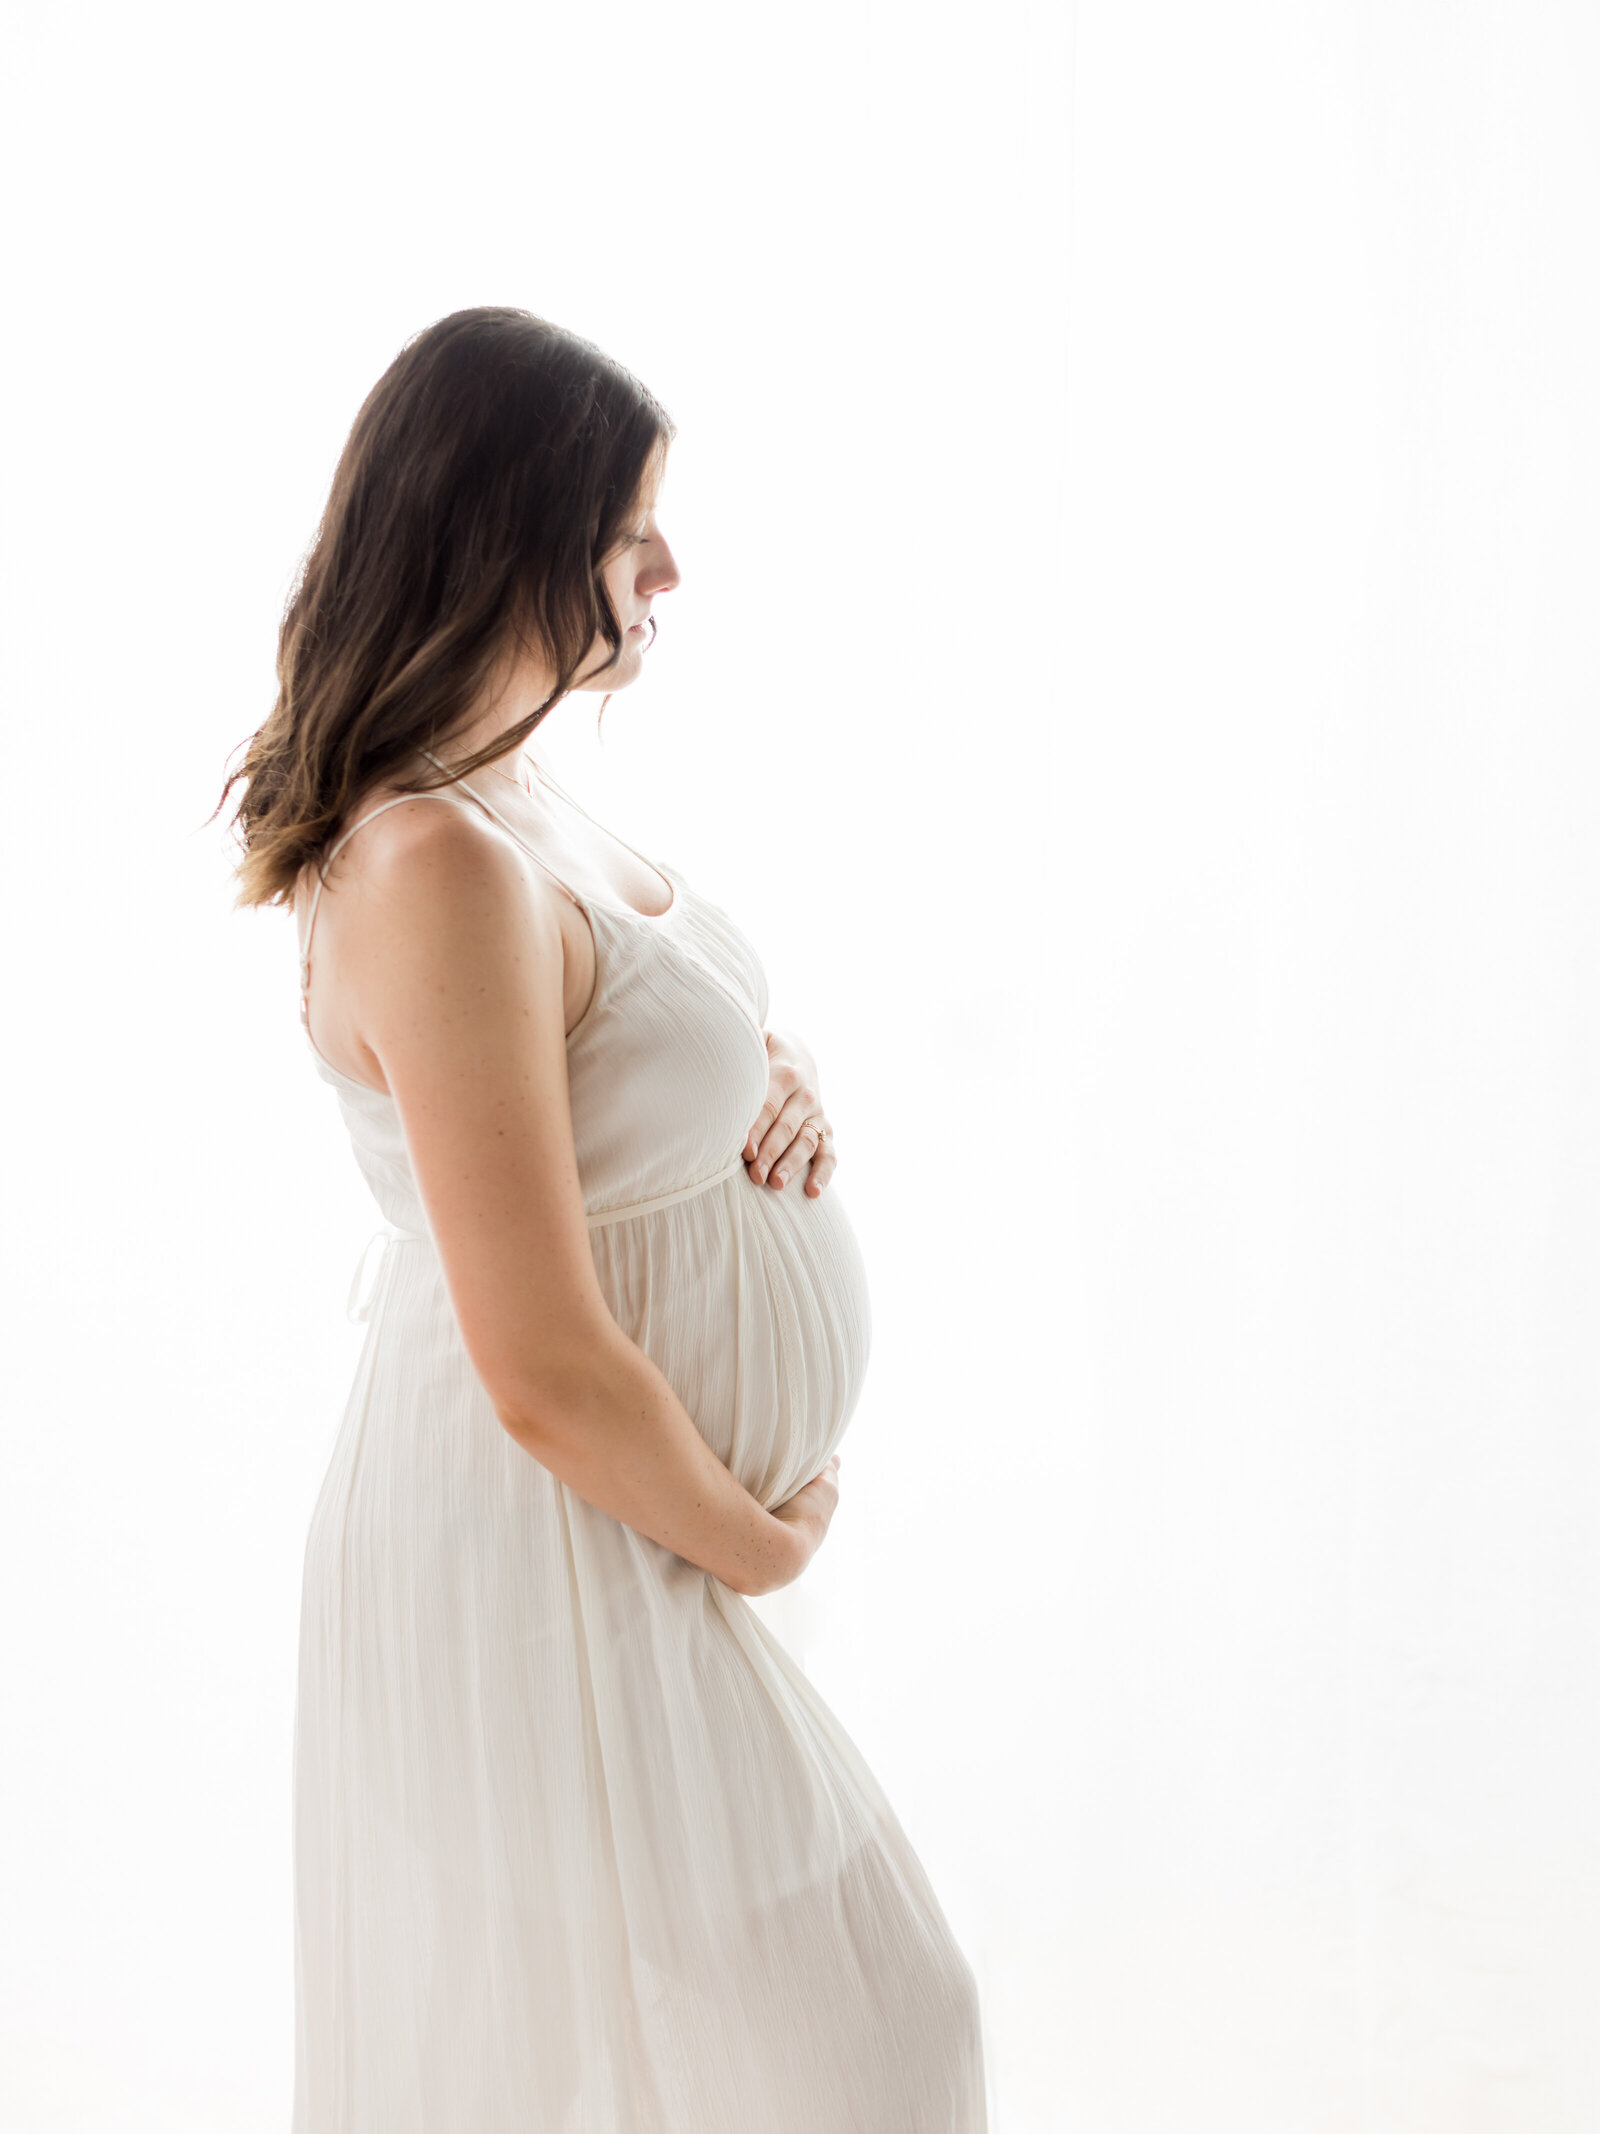 pregnant mom holding belly wearing white boho dress for maternity photoshoot